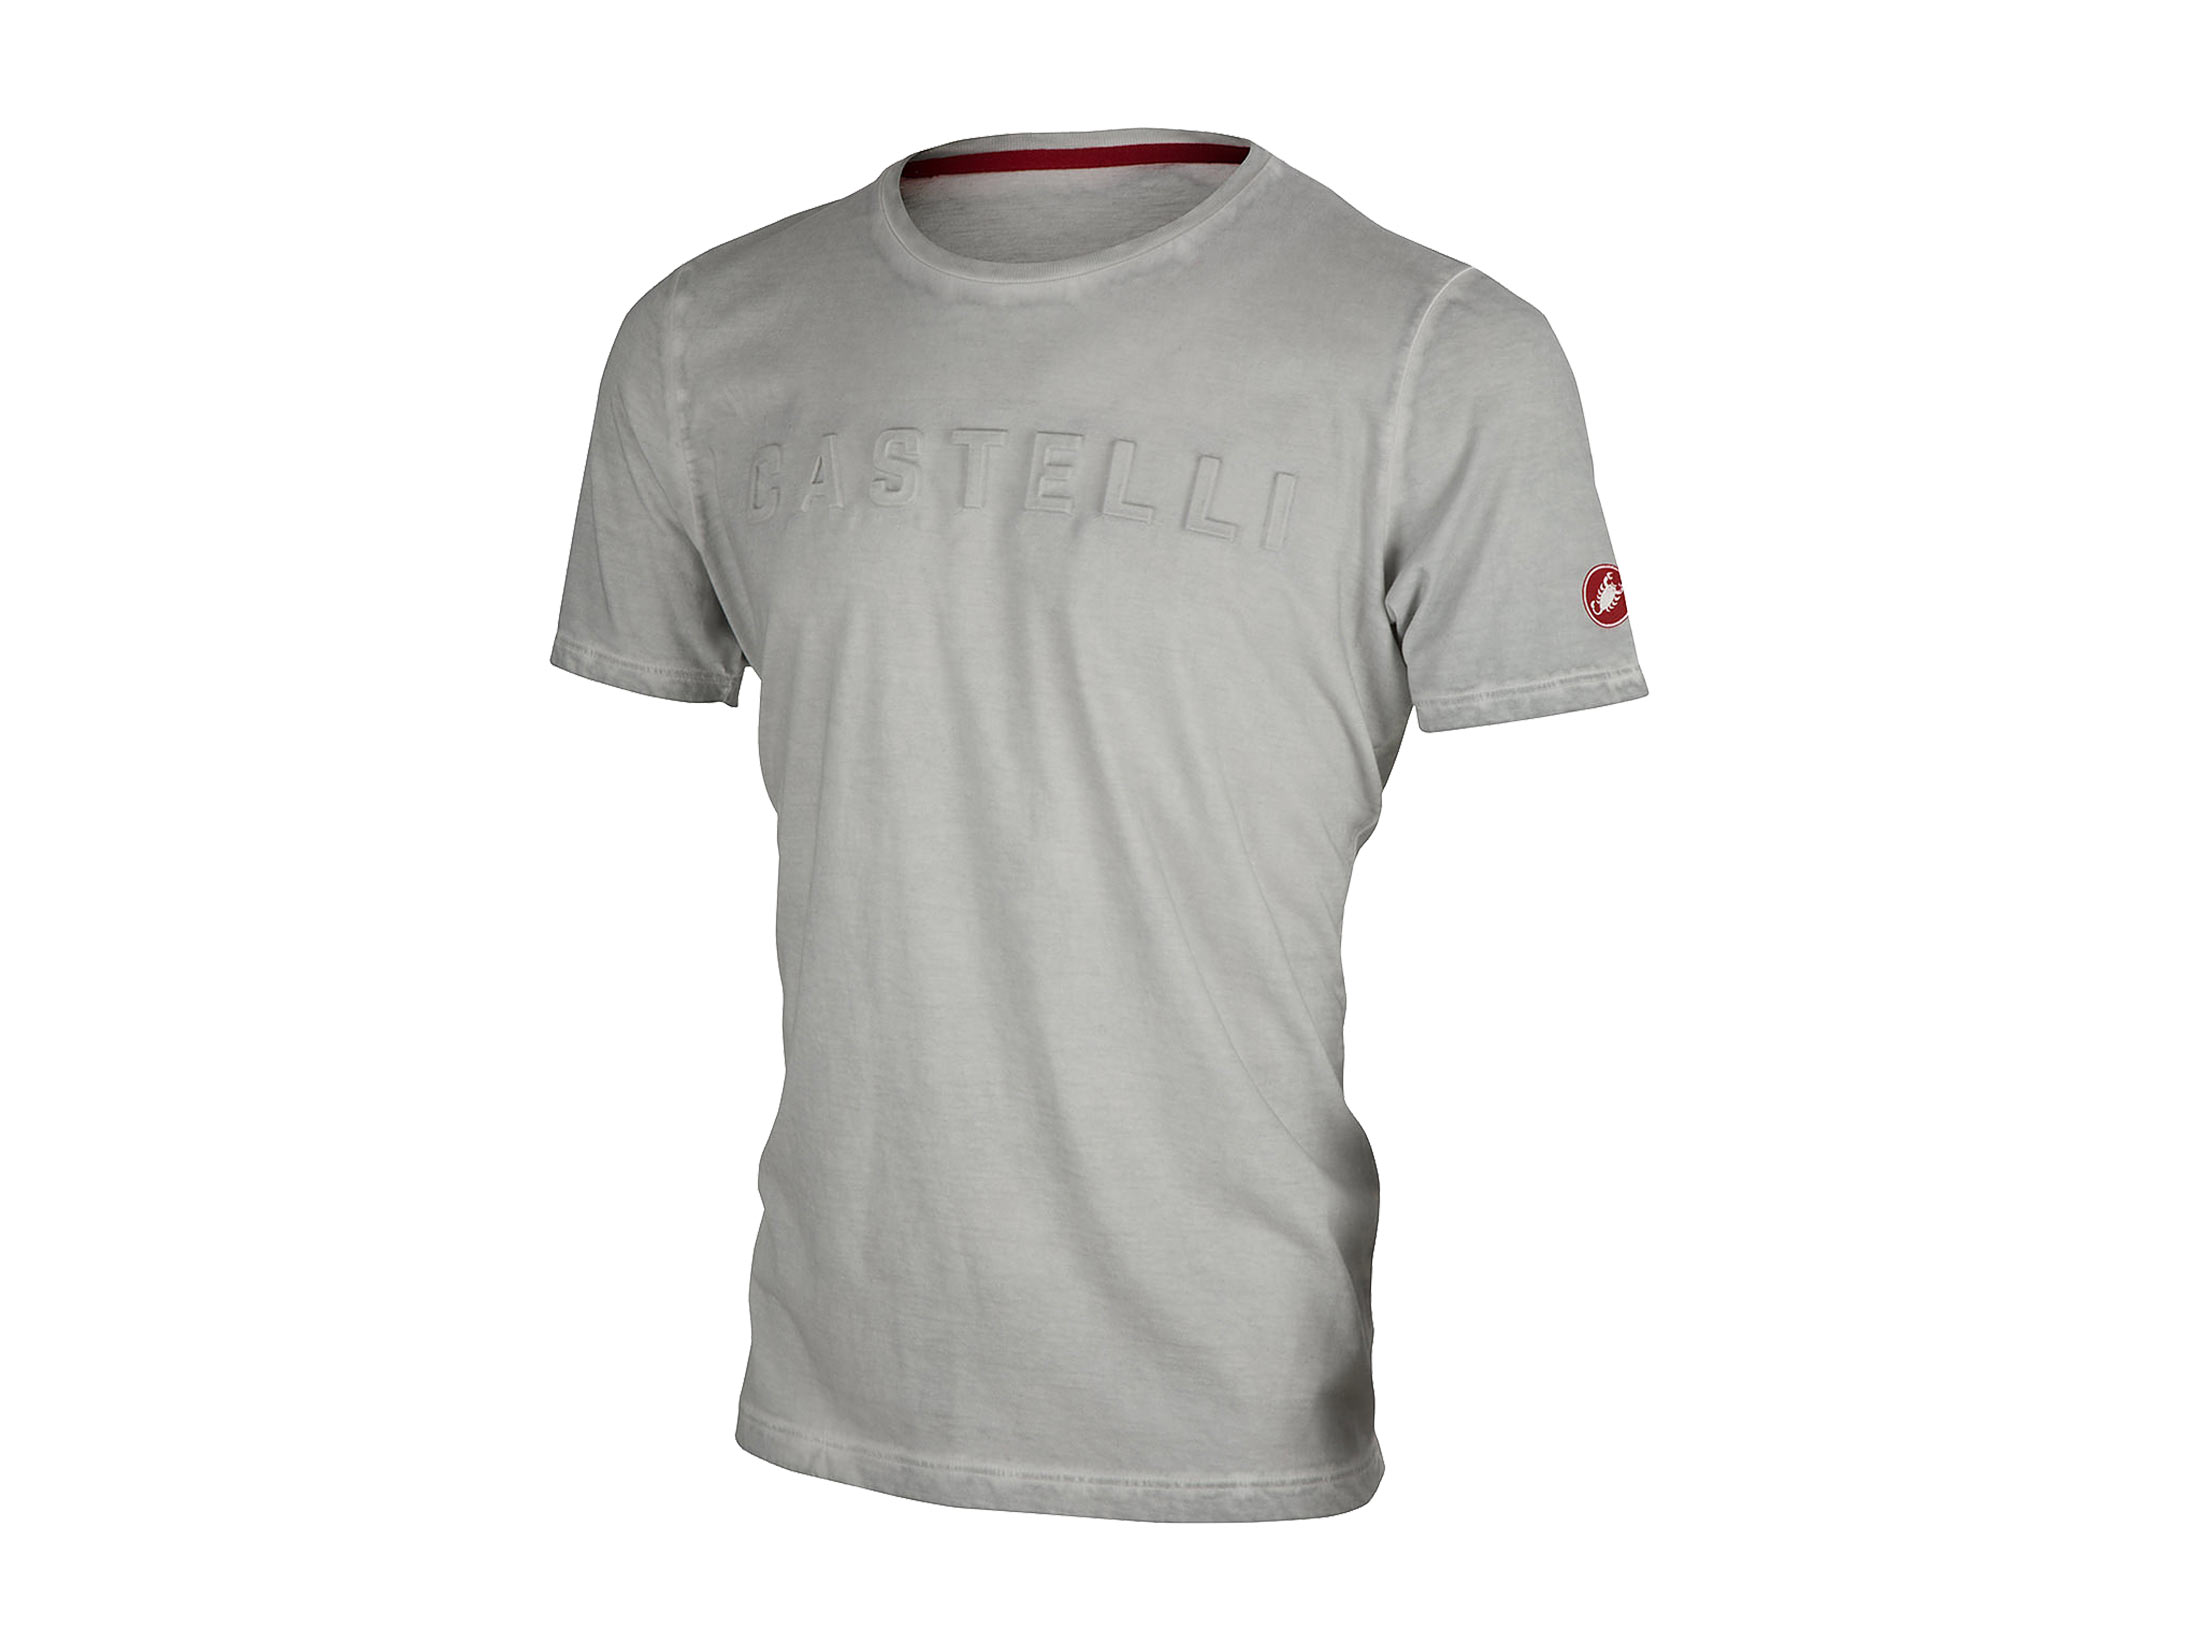 Castelli Bassorilievo Tee T-Shirt - Gray